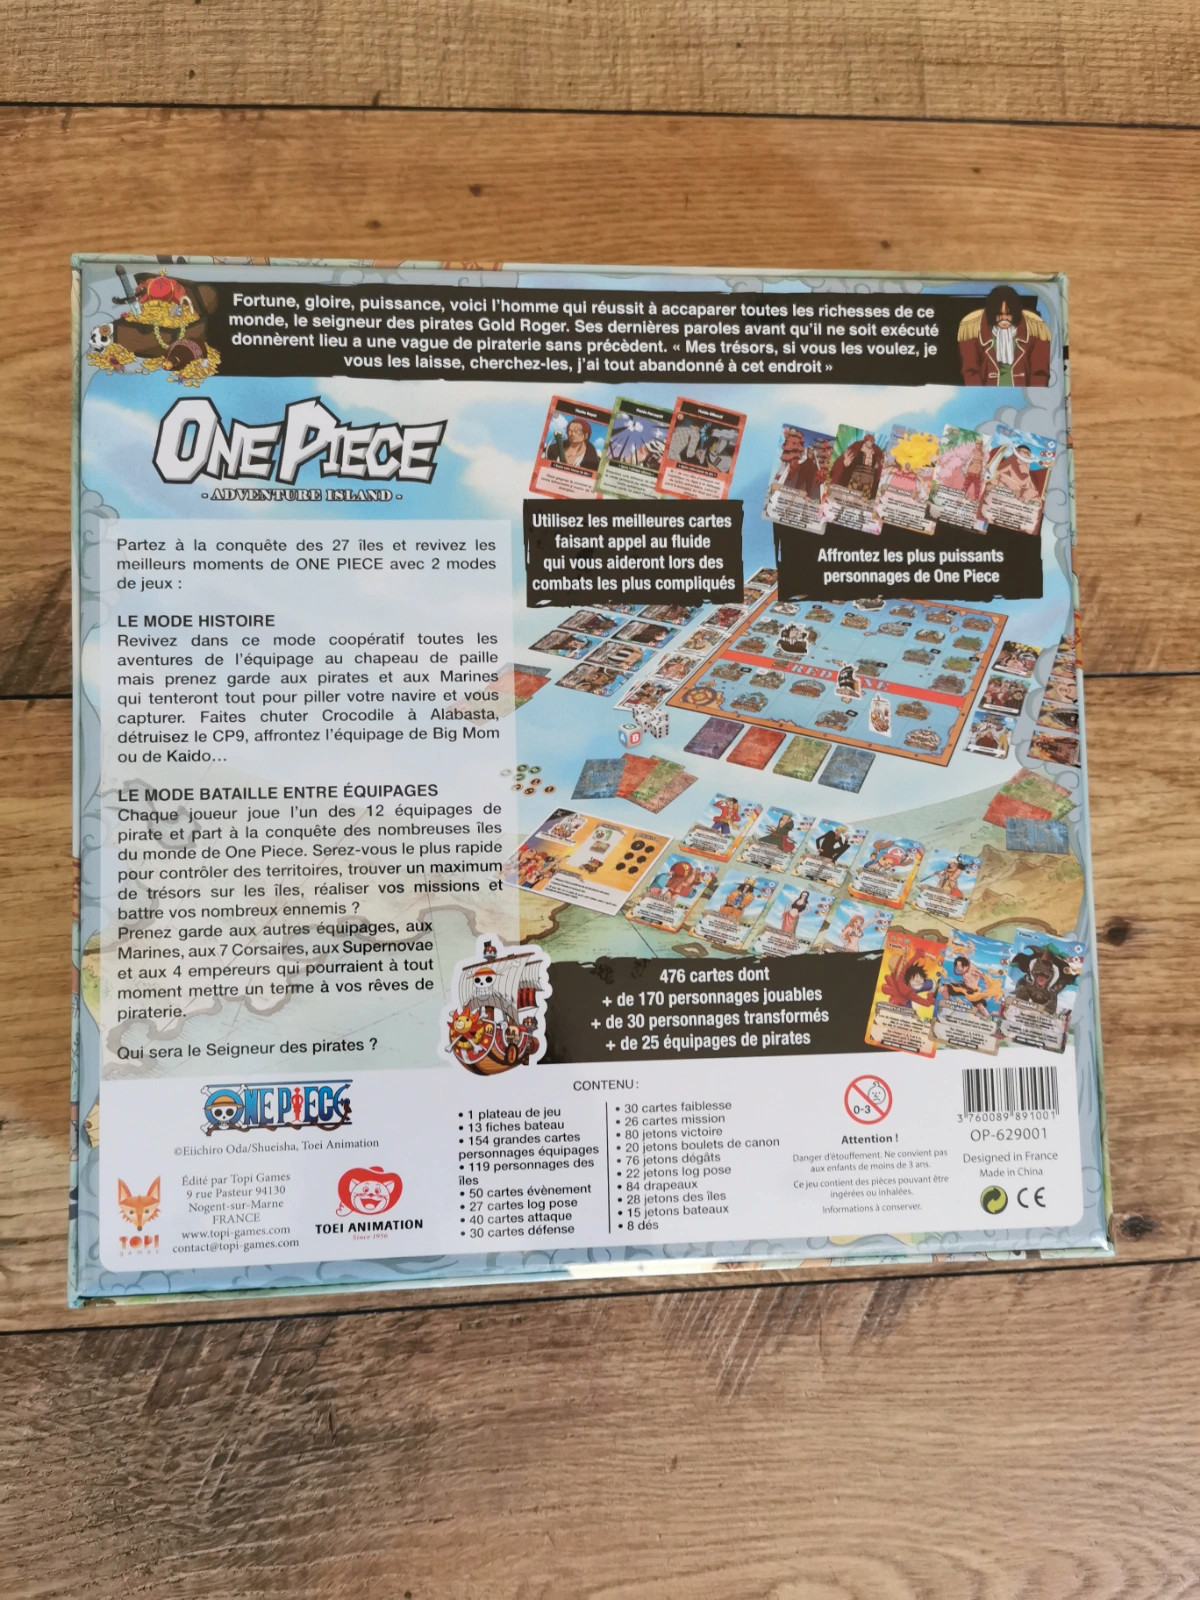 Acheter One Piece - Adventure Island - Le Jeu de Plateau - Jeux de